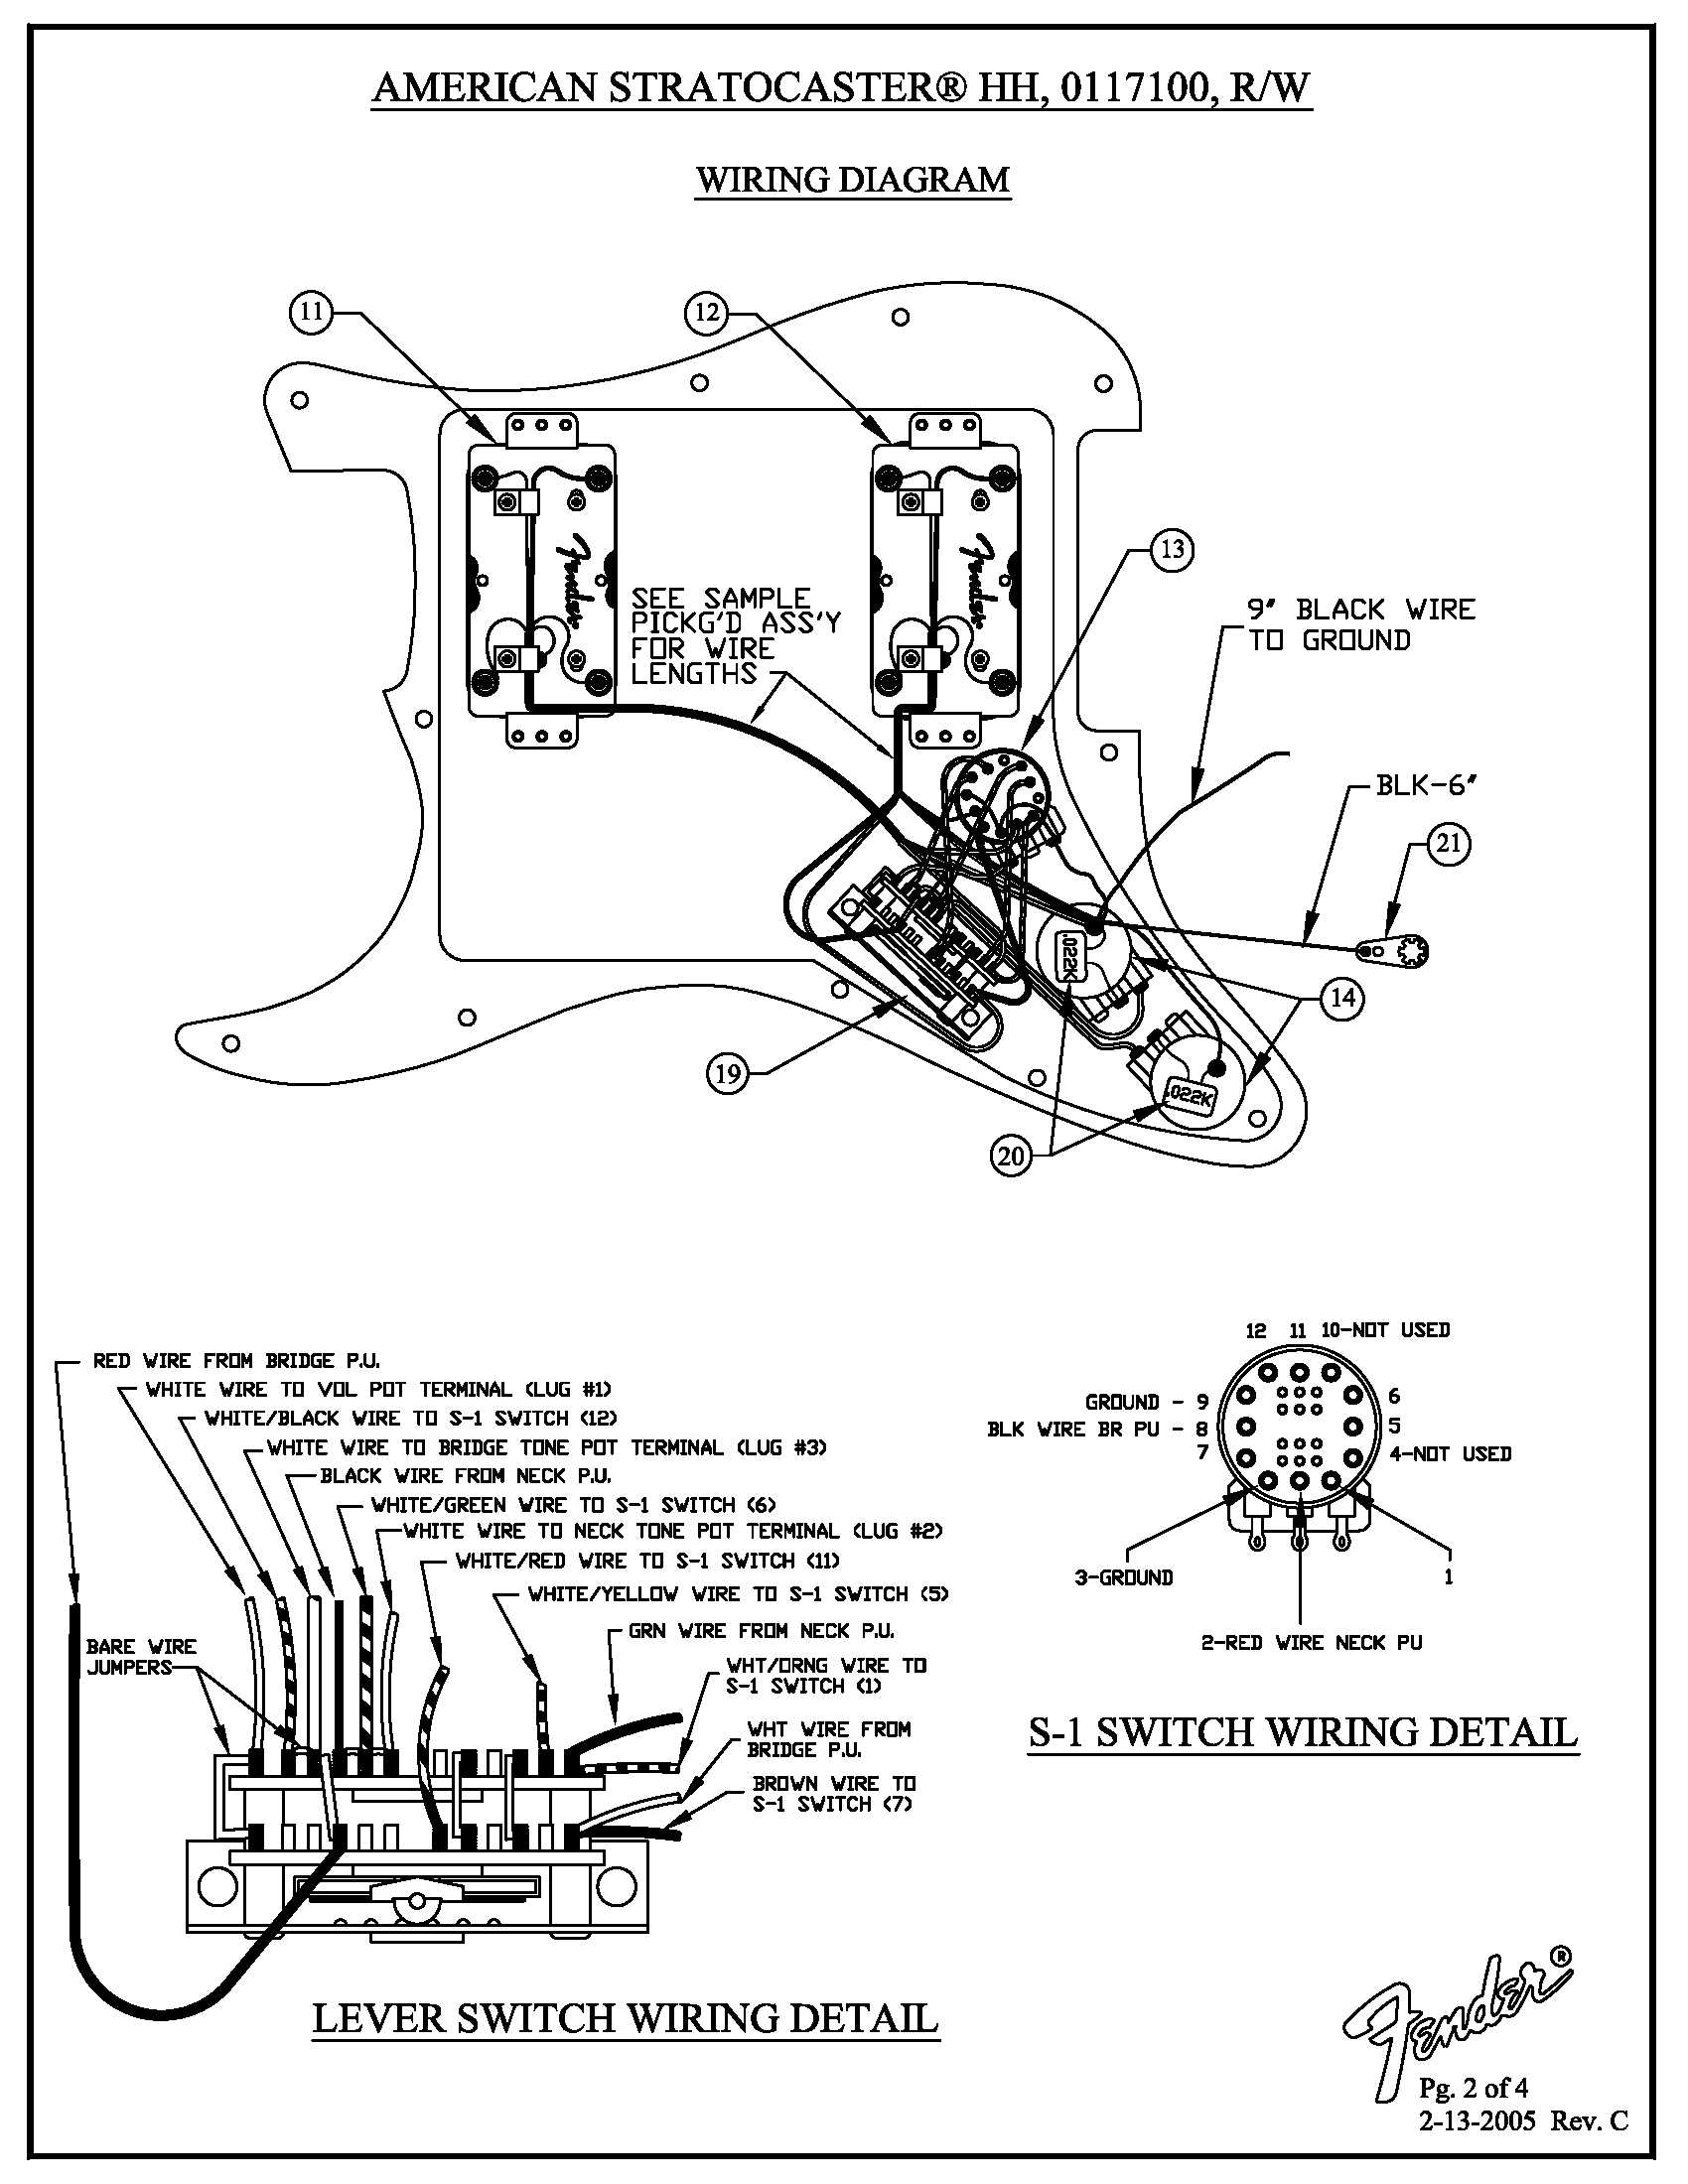 American Standard Stratocaster HH S-1 Wiring Diagram 0117100 · Customer Self-Service